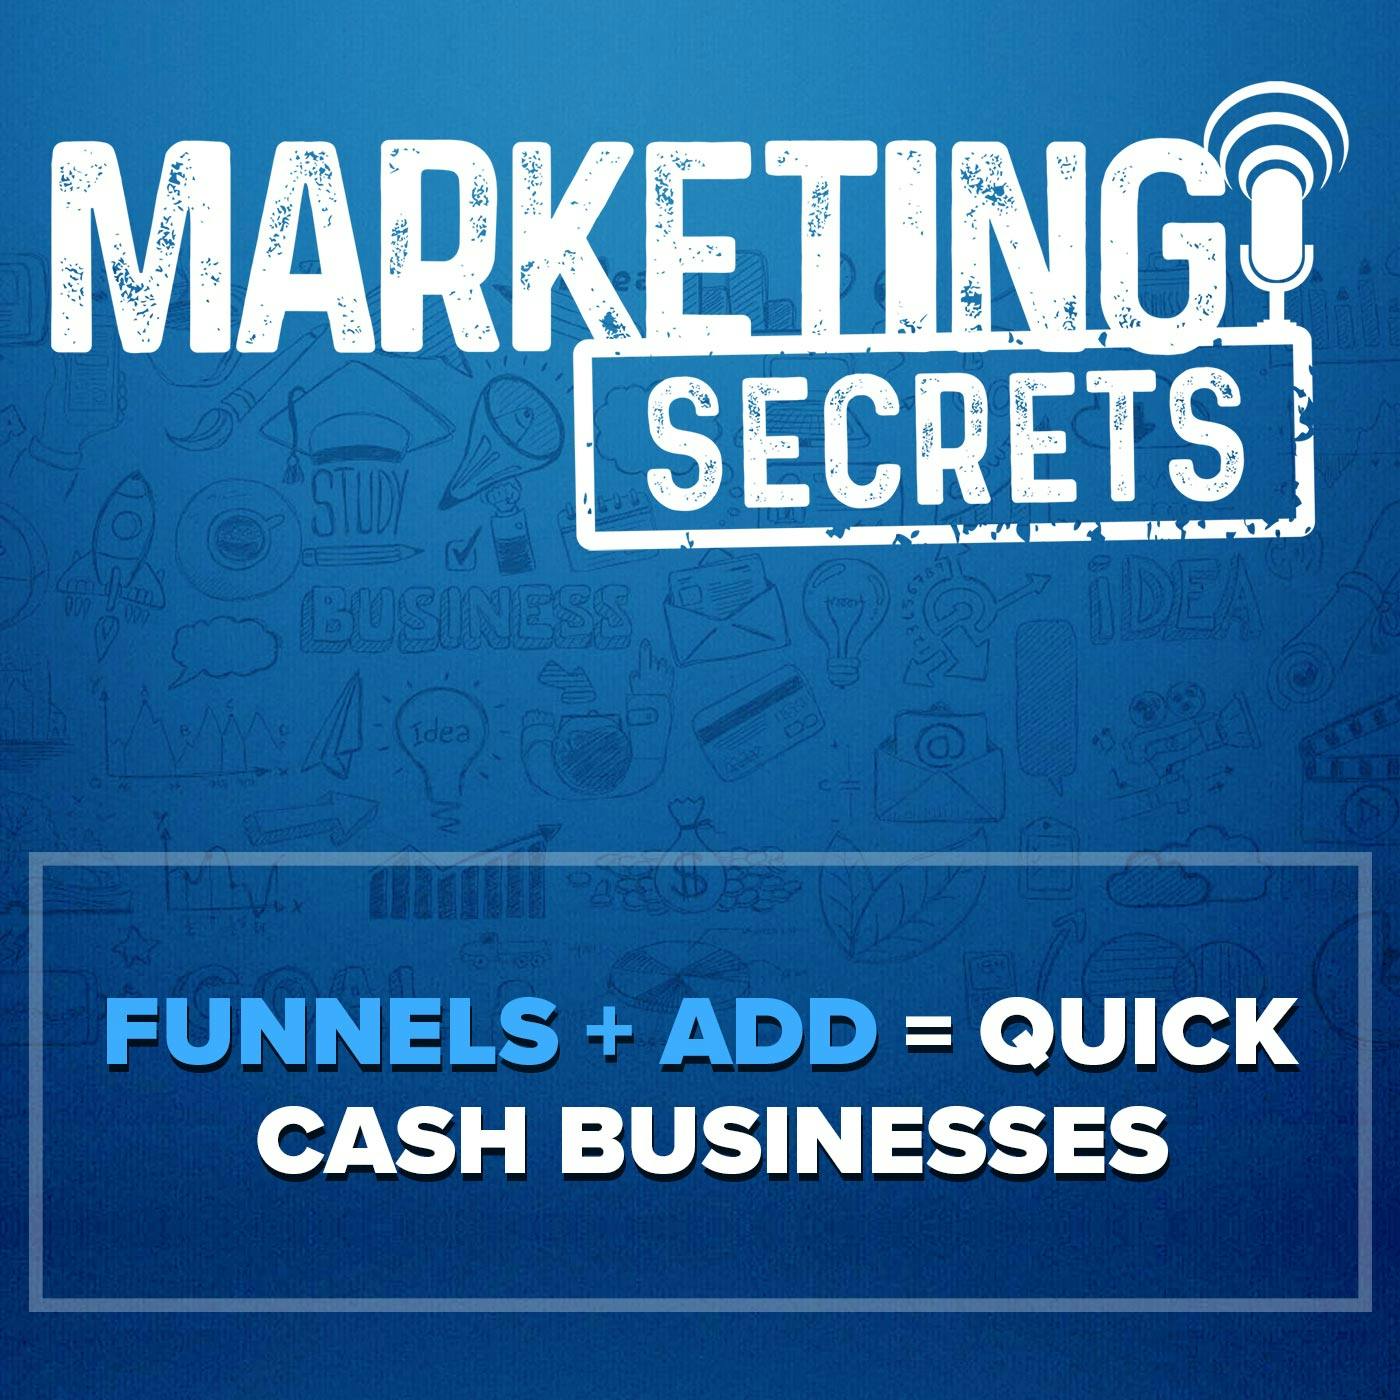 Funnels + ADD = Quick Cash Businesses